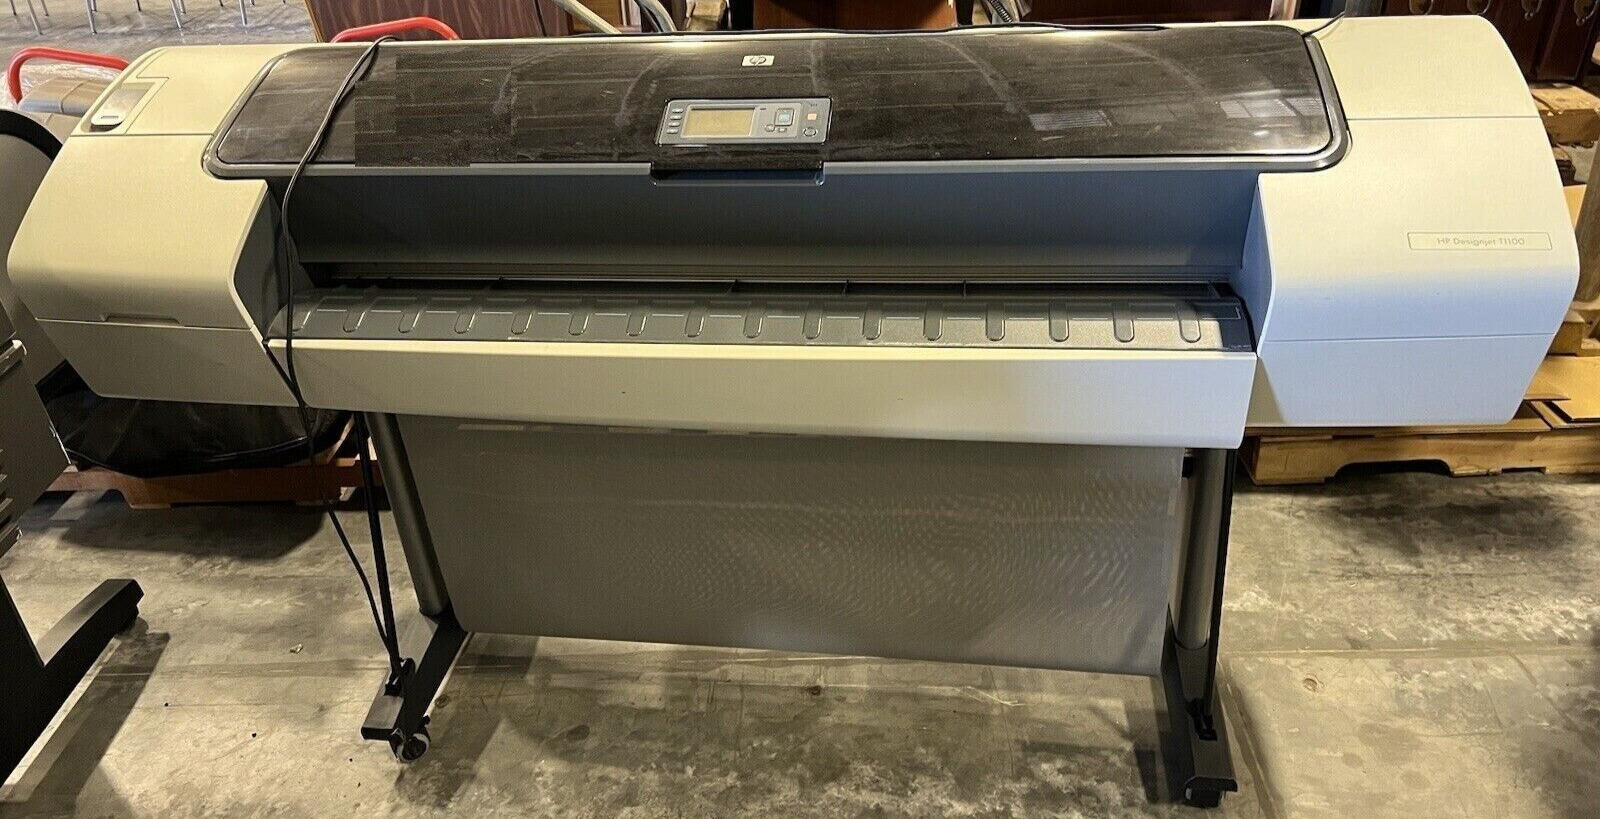 LOT OF LIFE LEFT HP Designjet T1100 Large Format Printer, over $1800 in Parts